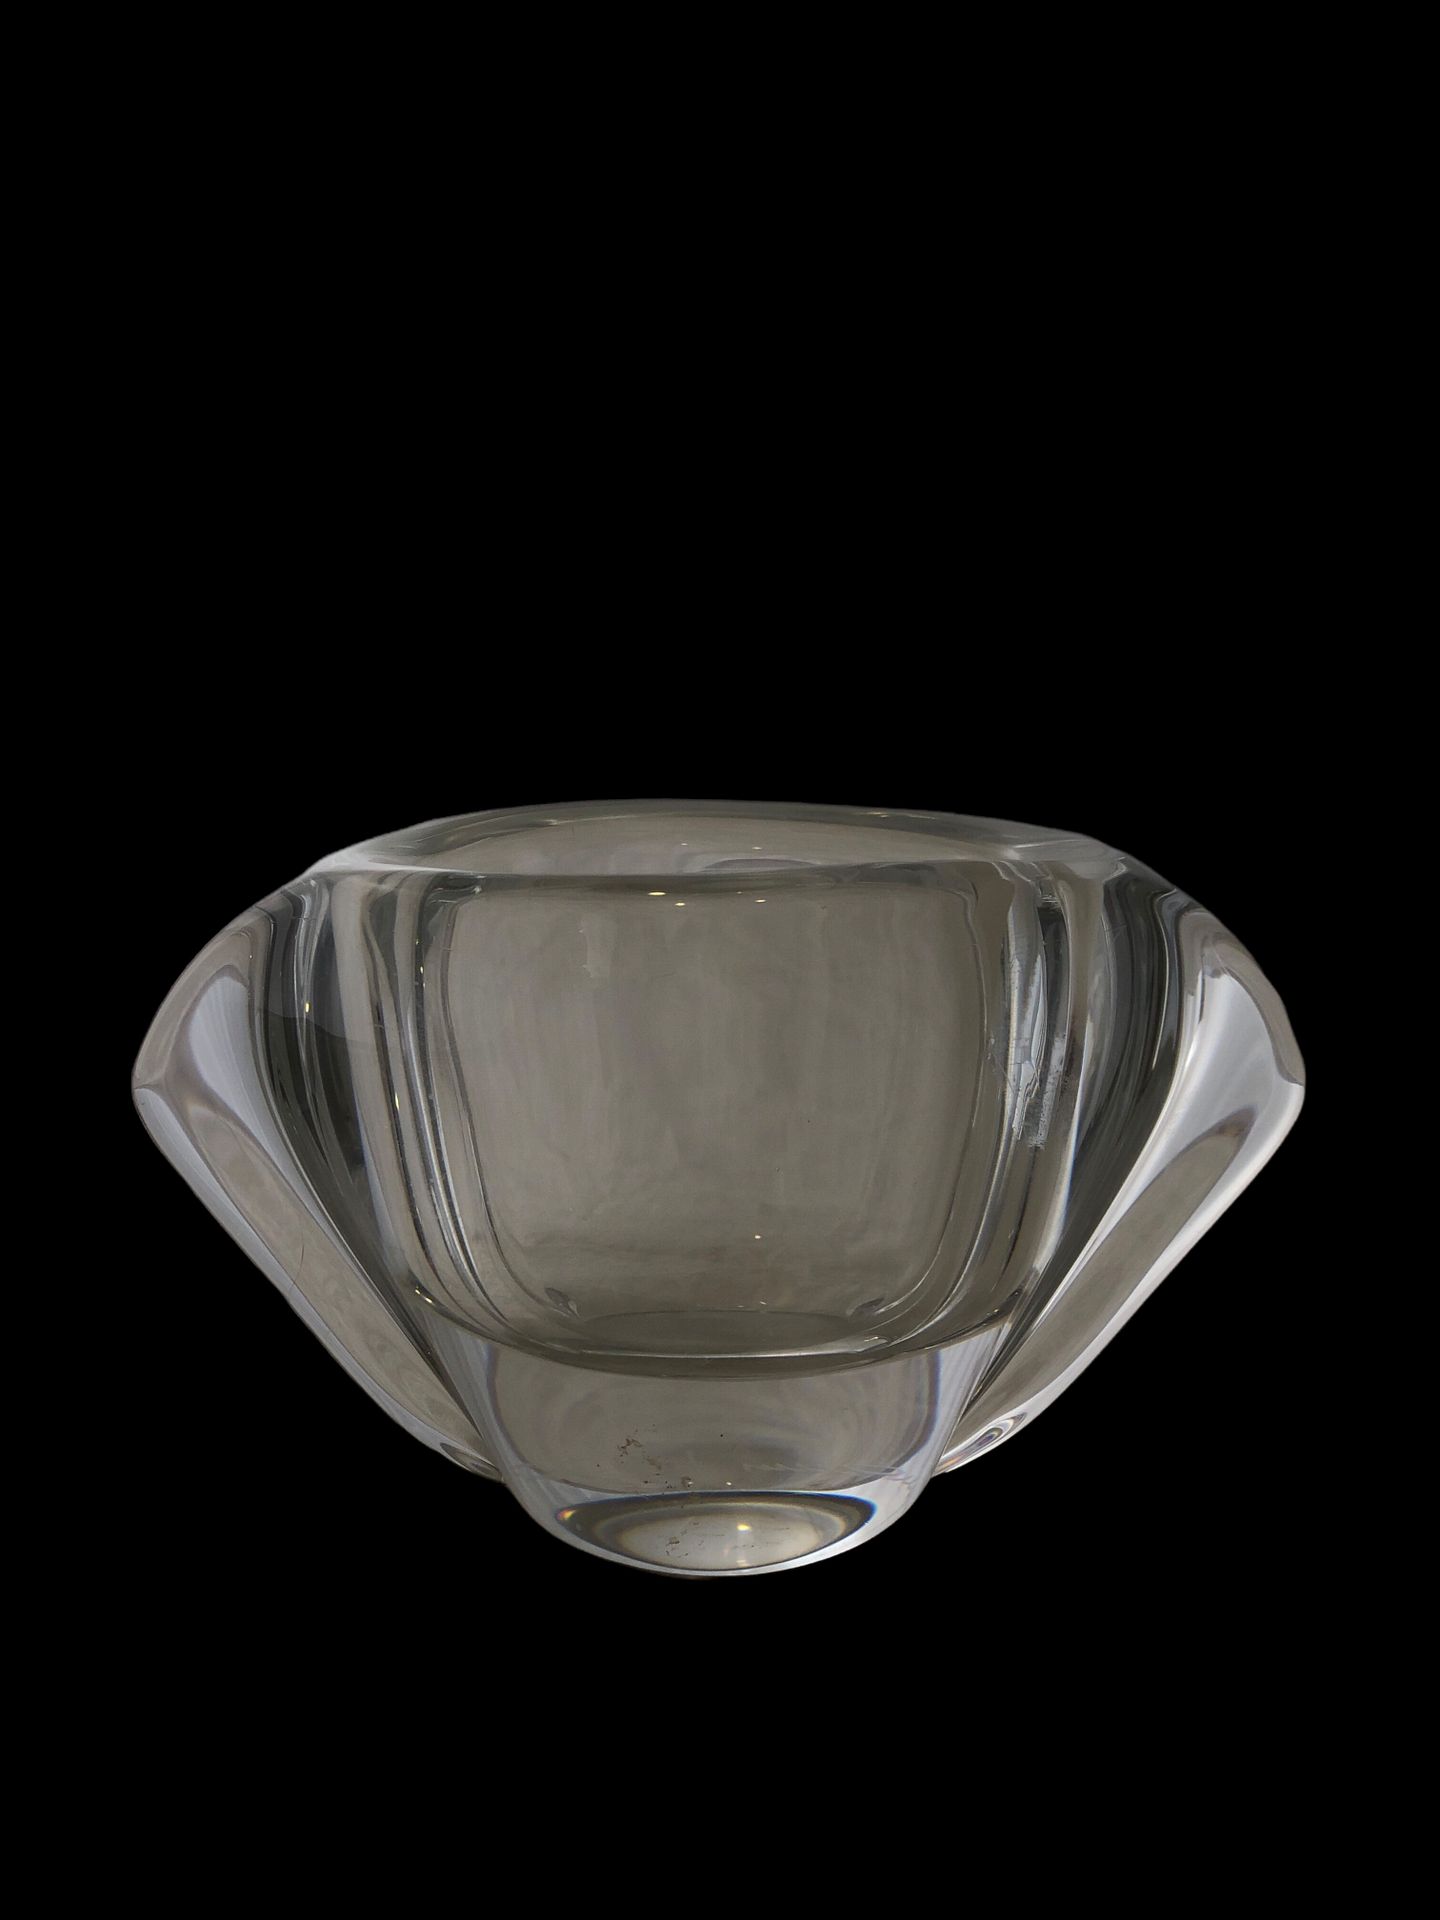 Null 法国DAUM公司，长方形吹制的带翅膀的水晶花瓶，署名Daum France。

高11.5厘米。

重要的裂缝。

附有一组彩色的玻璃珠子。